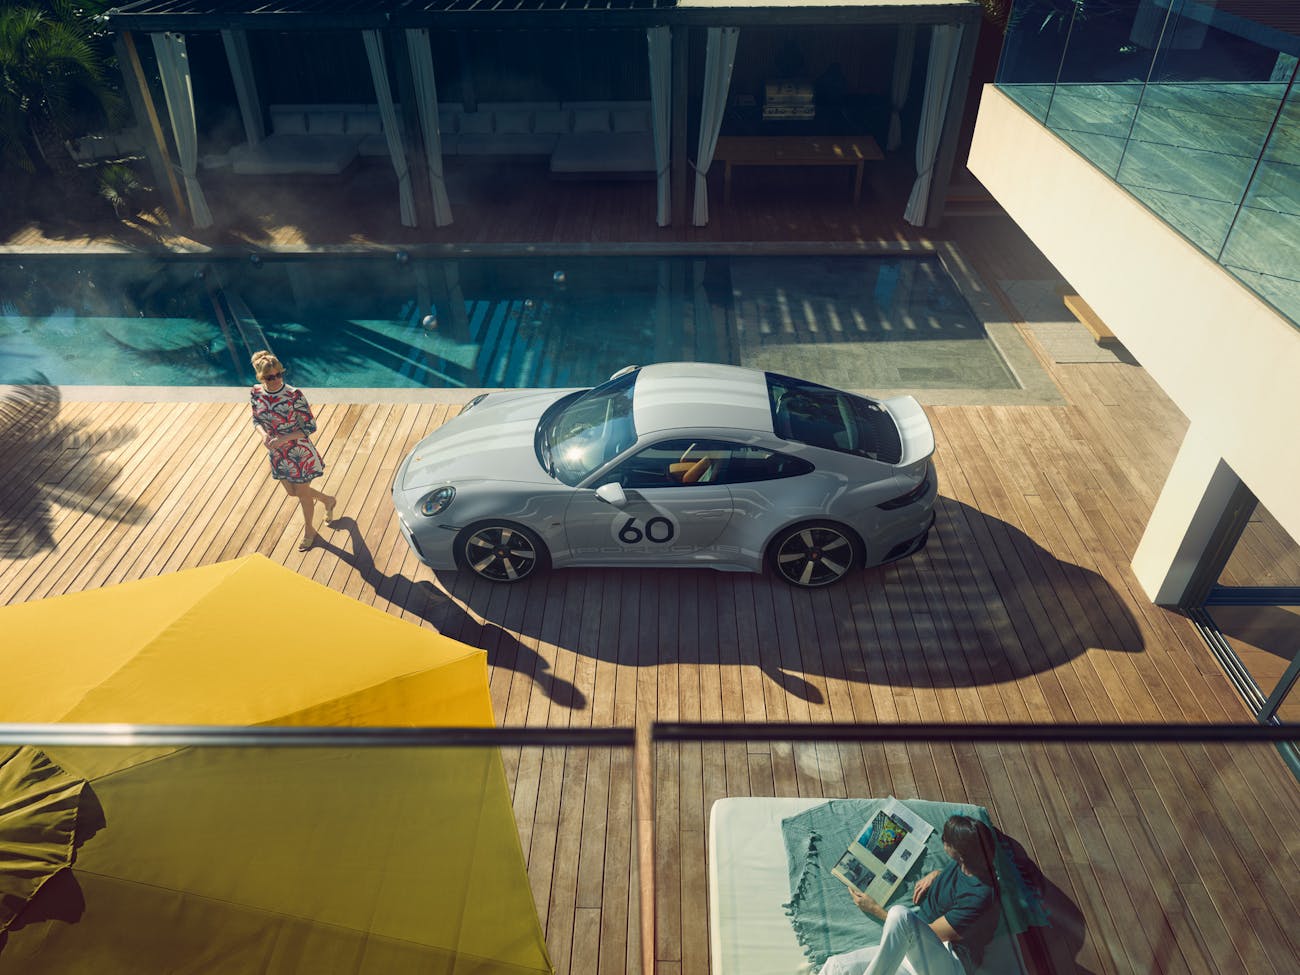 Bird’s-eye view of Porsche on decking beside swimming pool